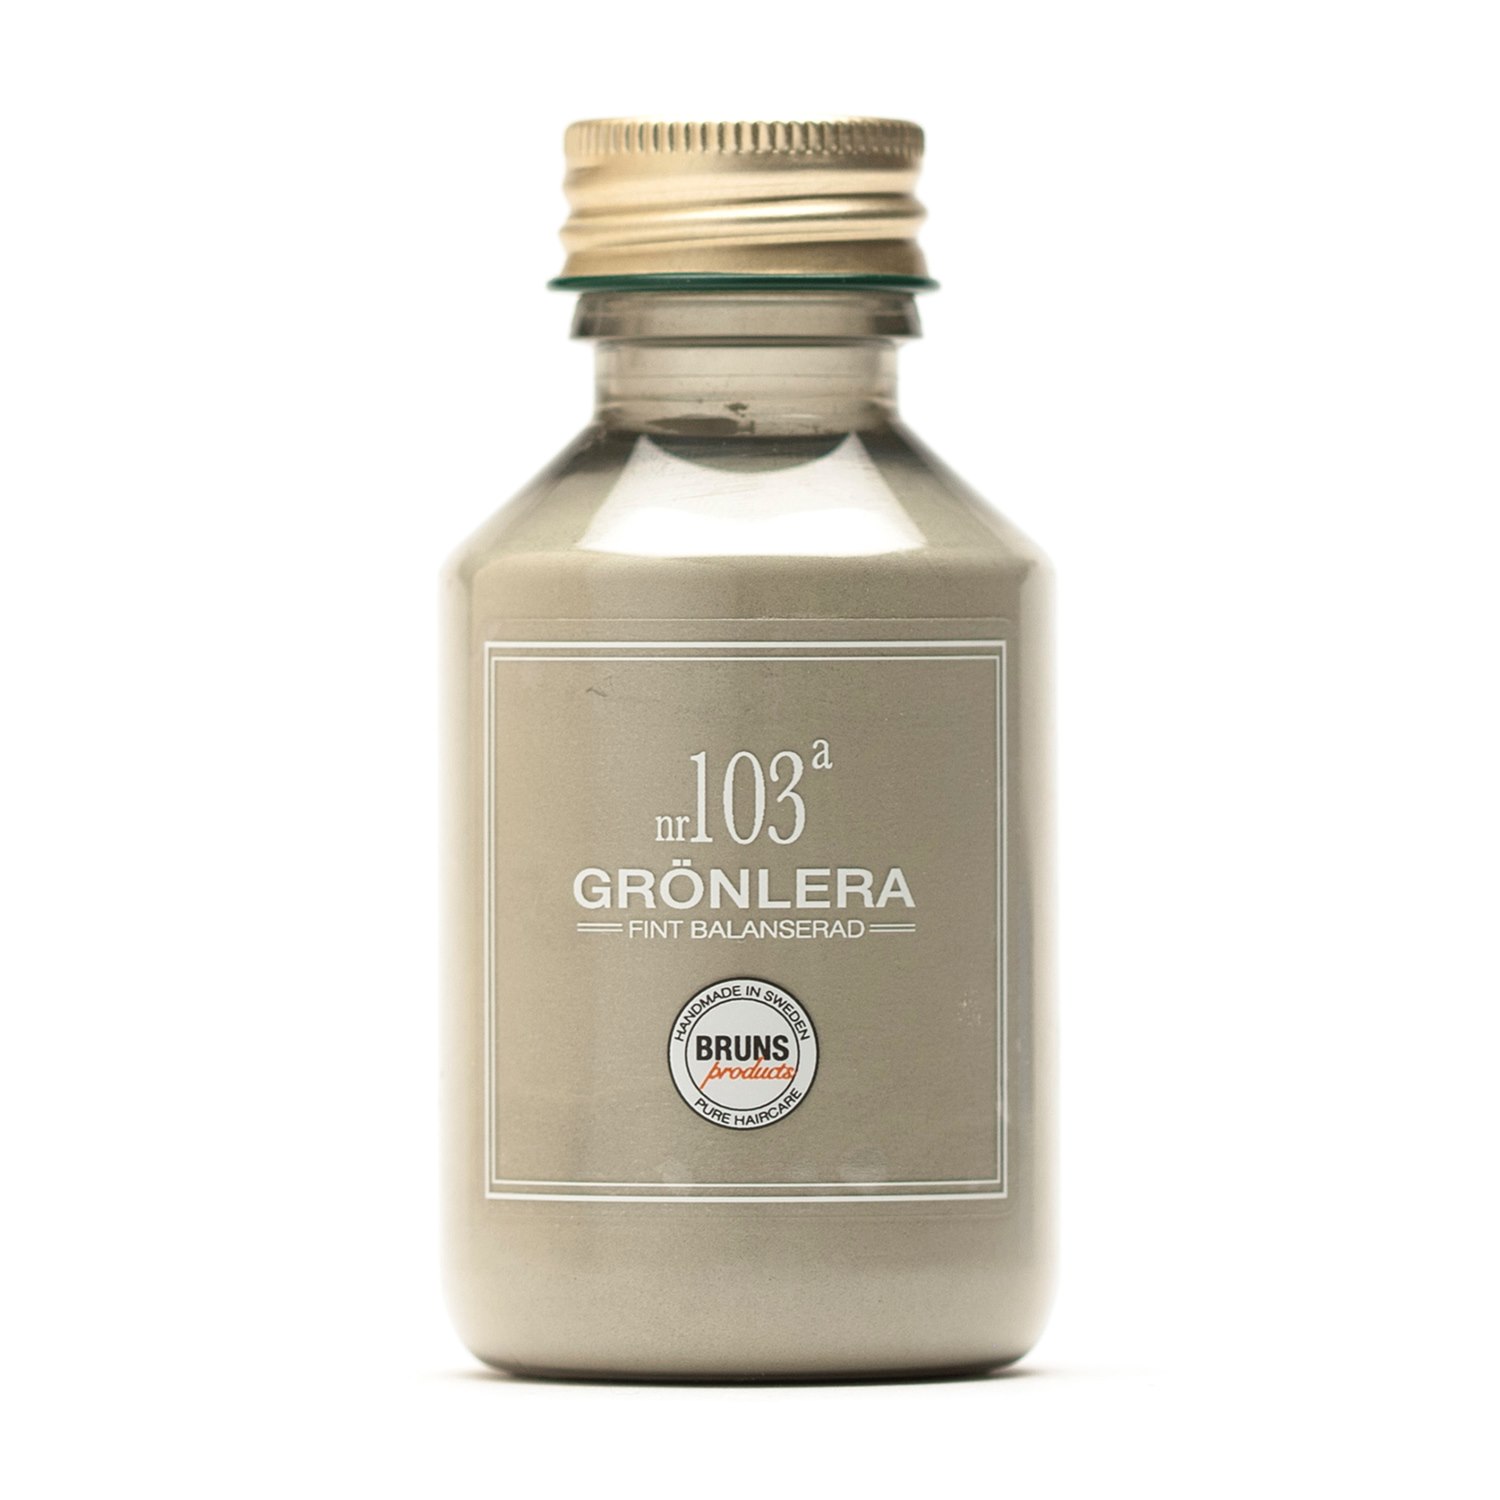 BRUNS Products Grönlera nr 103a - Fint Balanserad 100 g